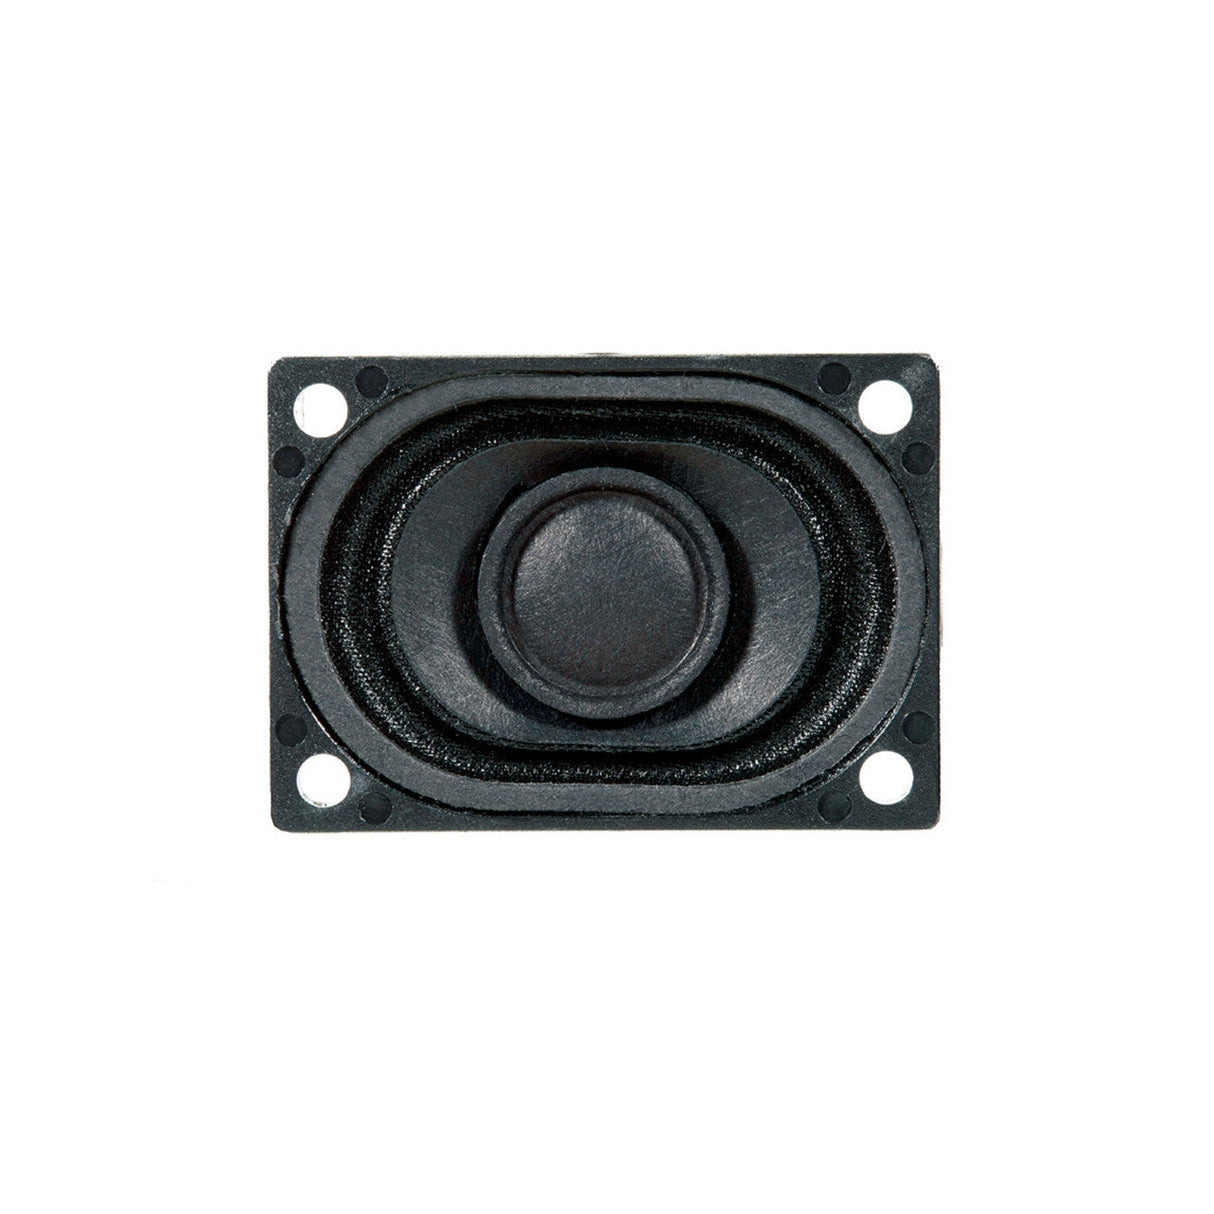 Soundtraxx 40 x 28.5mm oval, 8-ohm speaker